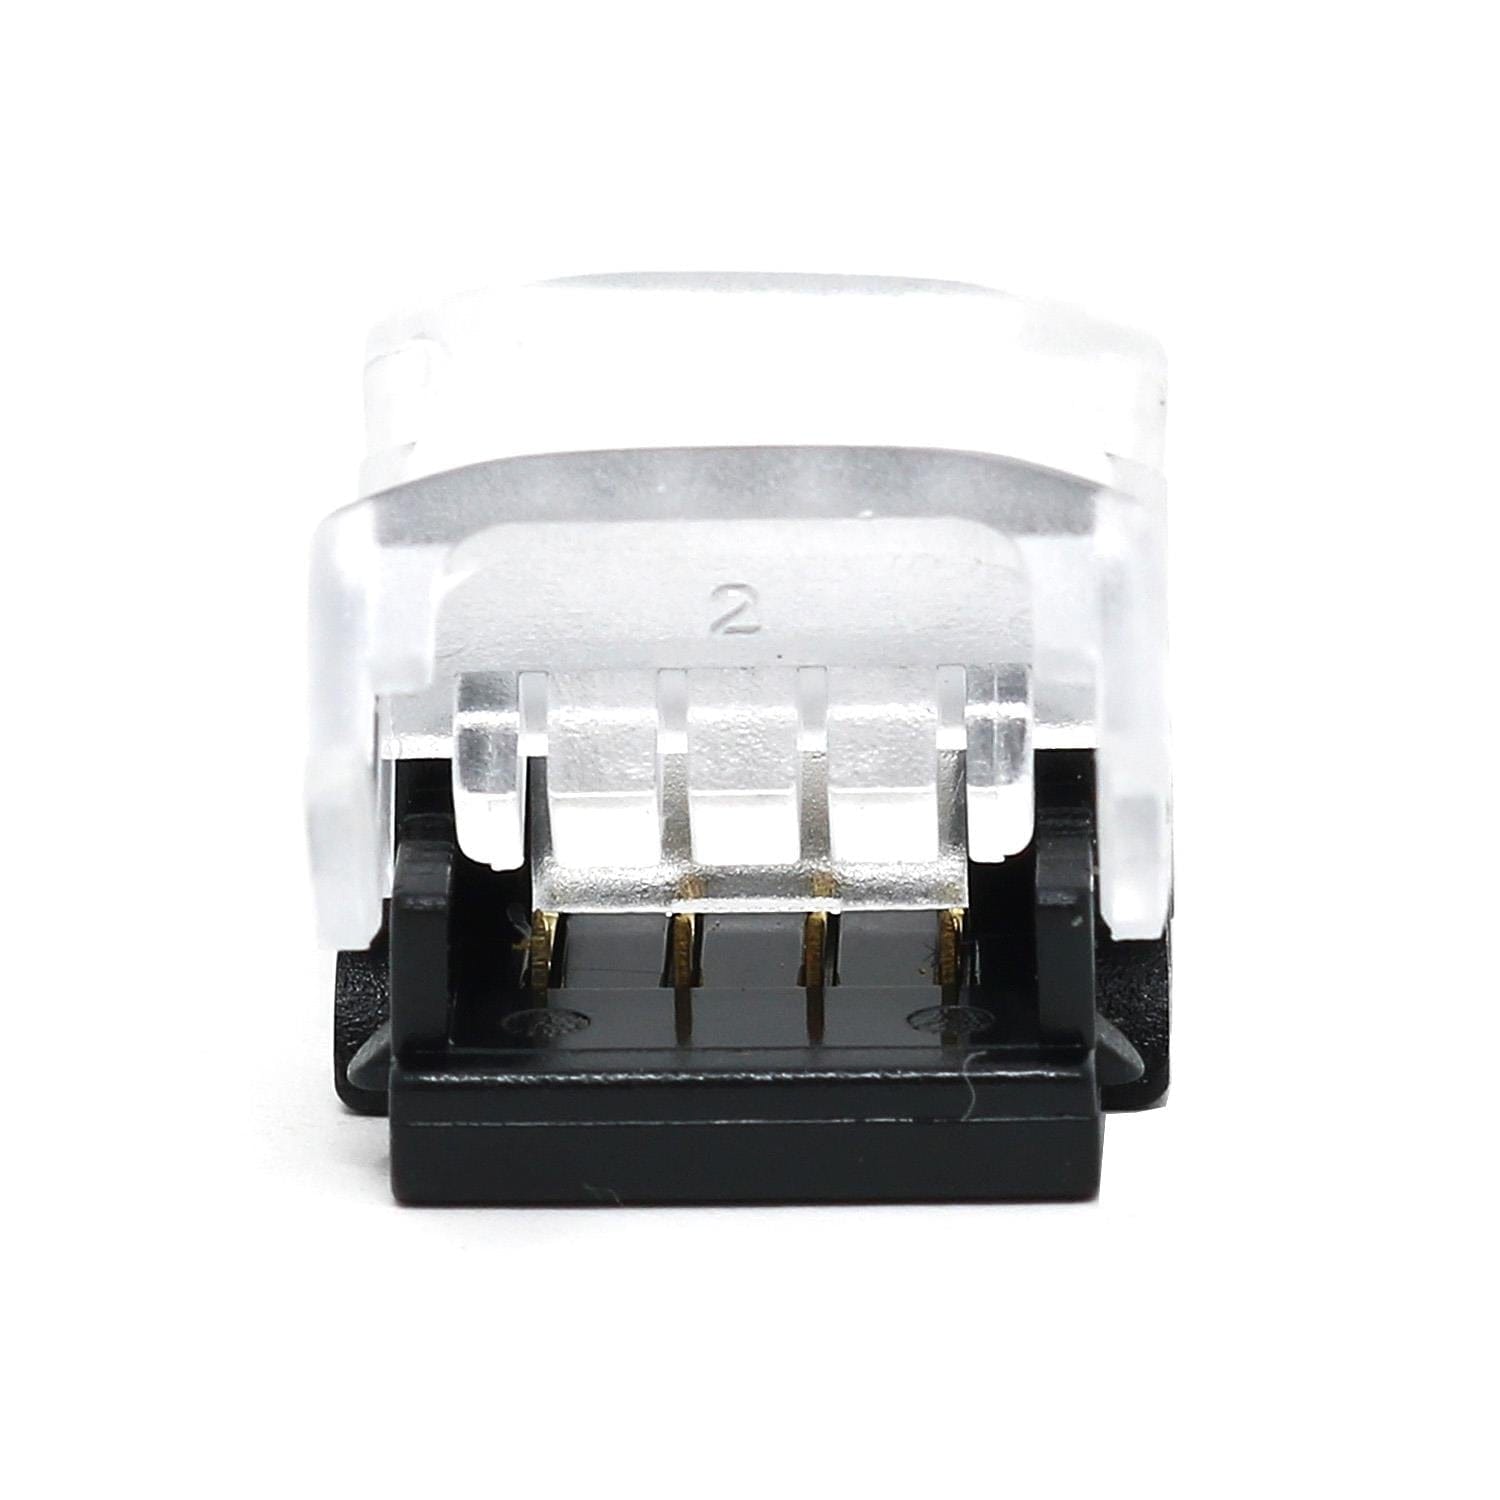 4-pin LED Strip Connectors - Strip to Strip (10mm) - The Pi Hut